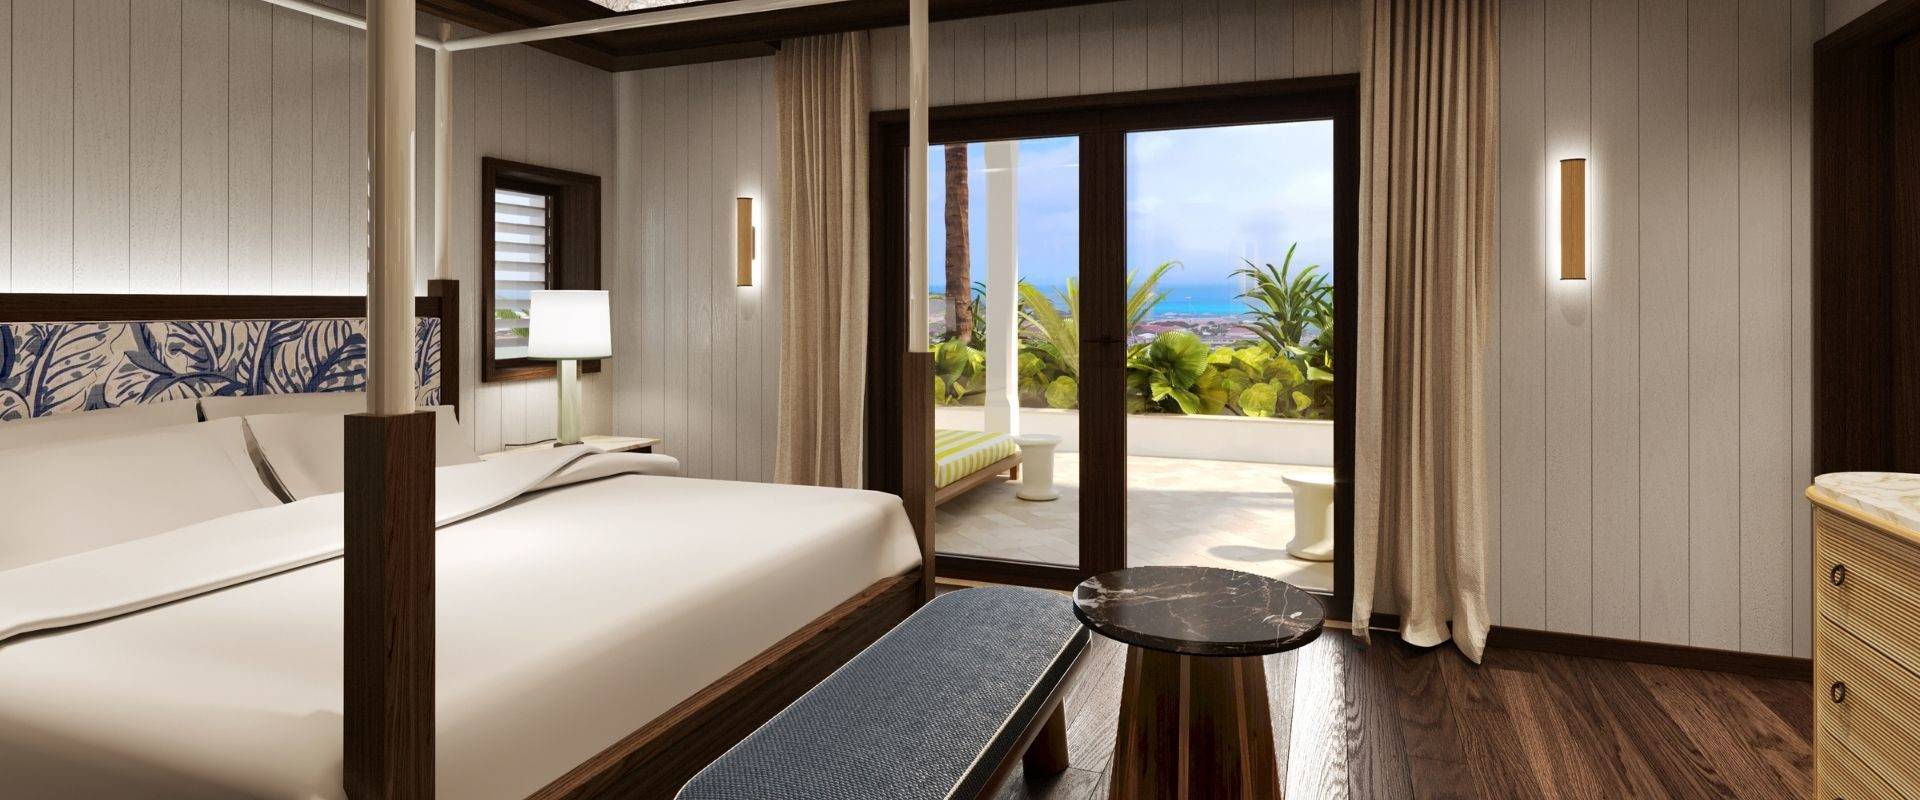 6-St-Barts-Fouquets-hotel-barriere-carl-gustaf-Gustavia.jpg